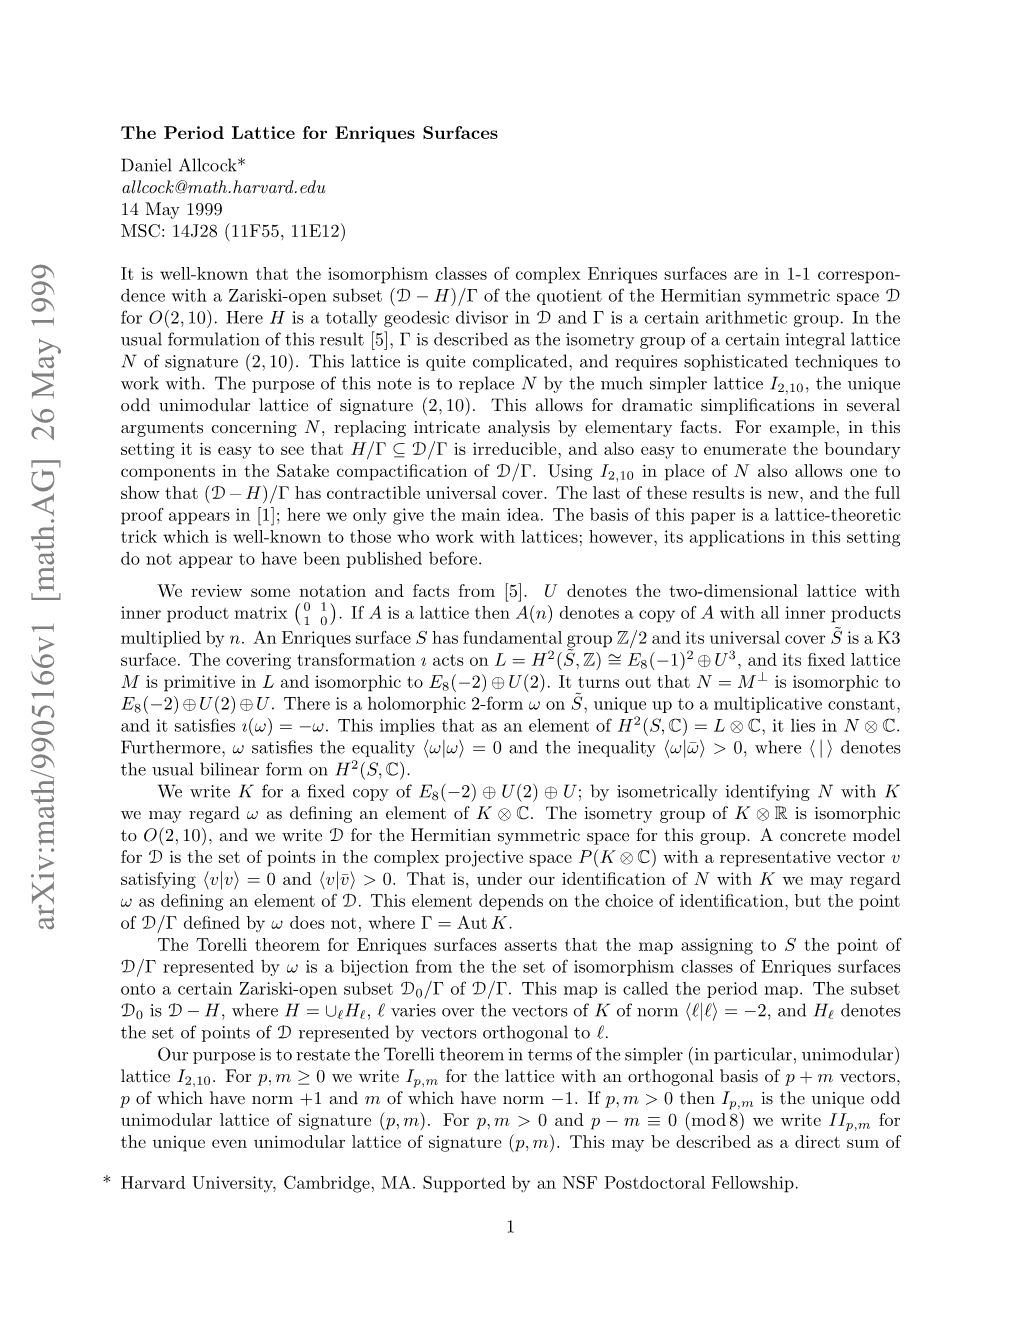 [Math.AG] 26 May 1999 Avr Nvriy Abig,M.Spotdb Nnfpos NSF an by Supported MA